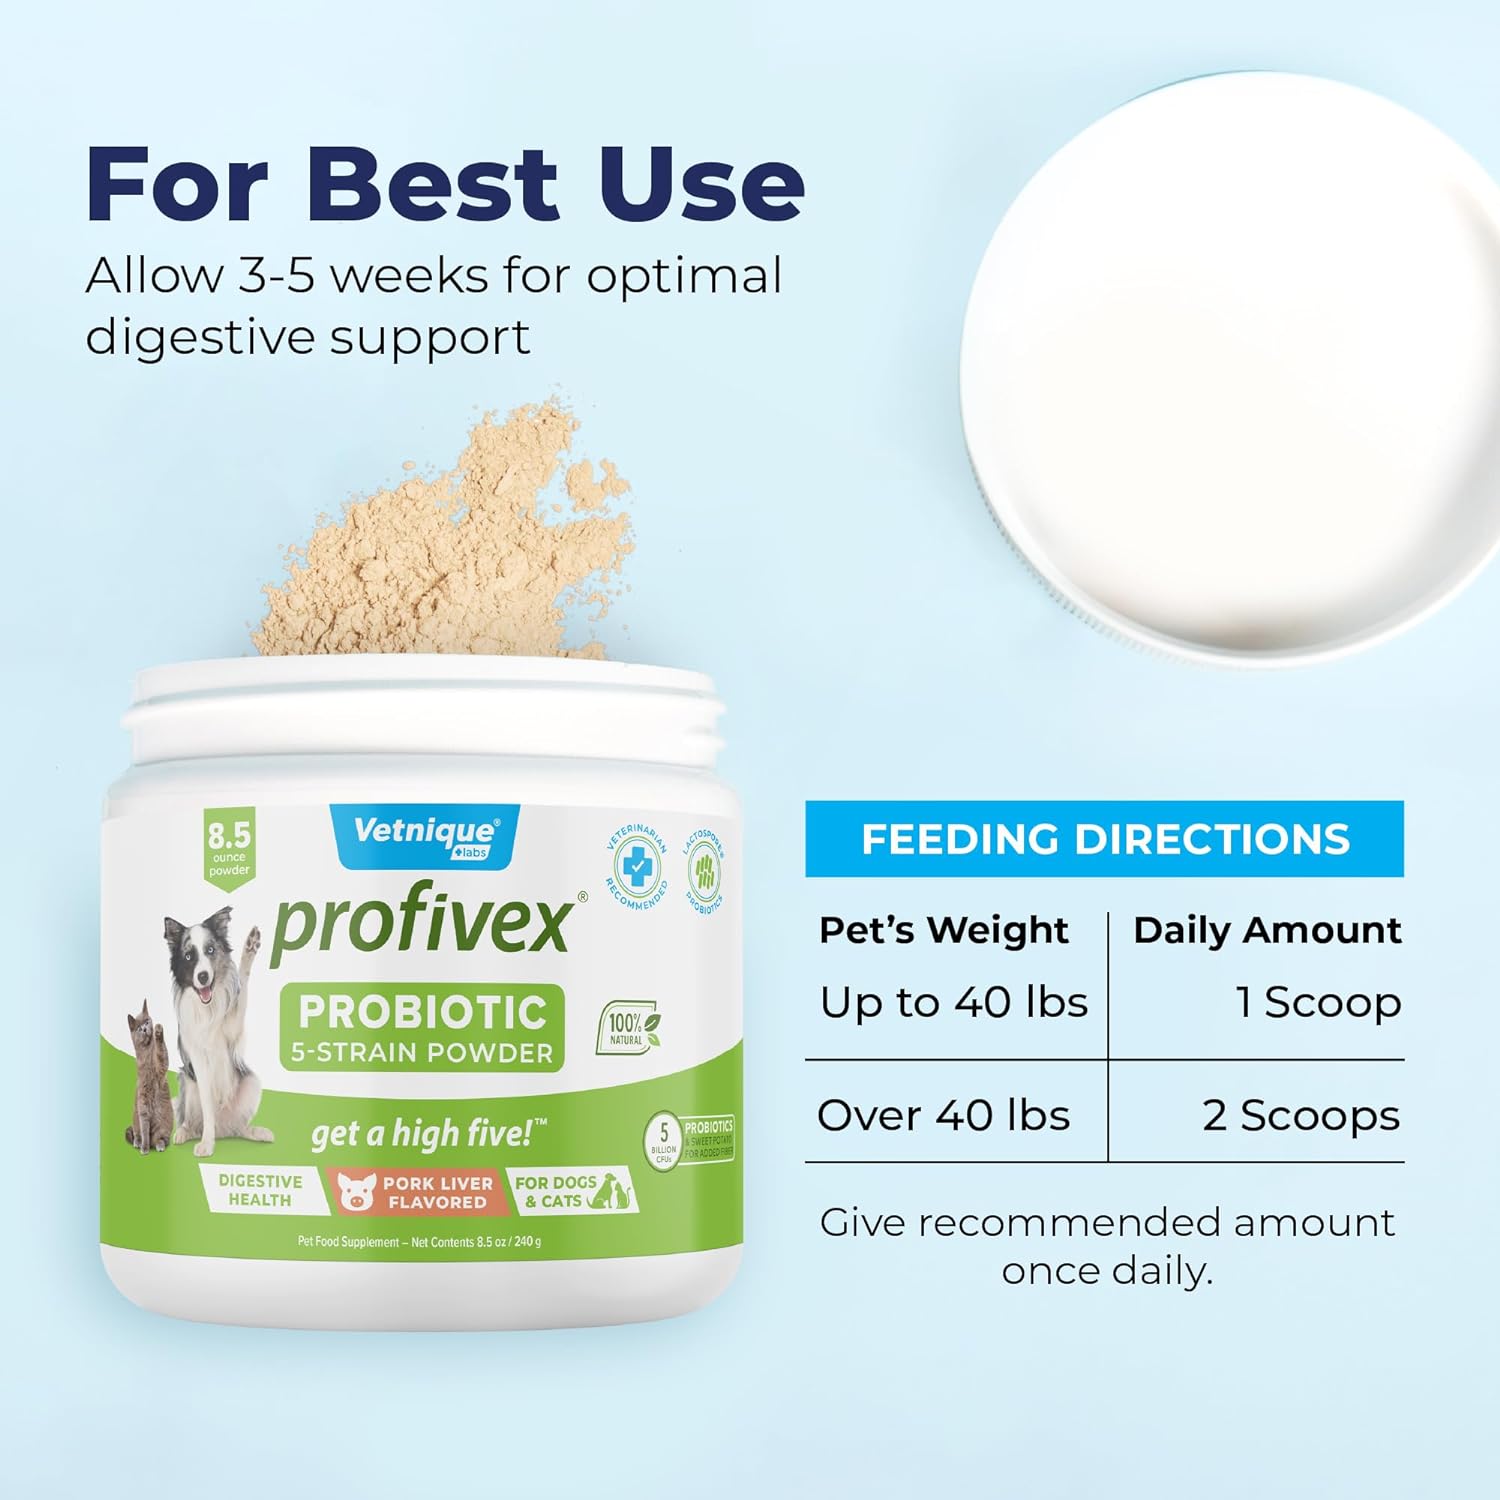 Vetnique Labs Profivex Probiotics for Dogs All Natural Dog Chews & Powder for Digestive Health Probiotic Supplements for Dogs 5 Strains of Probiotics & Prebiotics (Powder, 8.5oz) : Pet Supplies